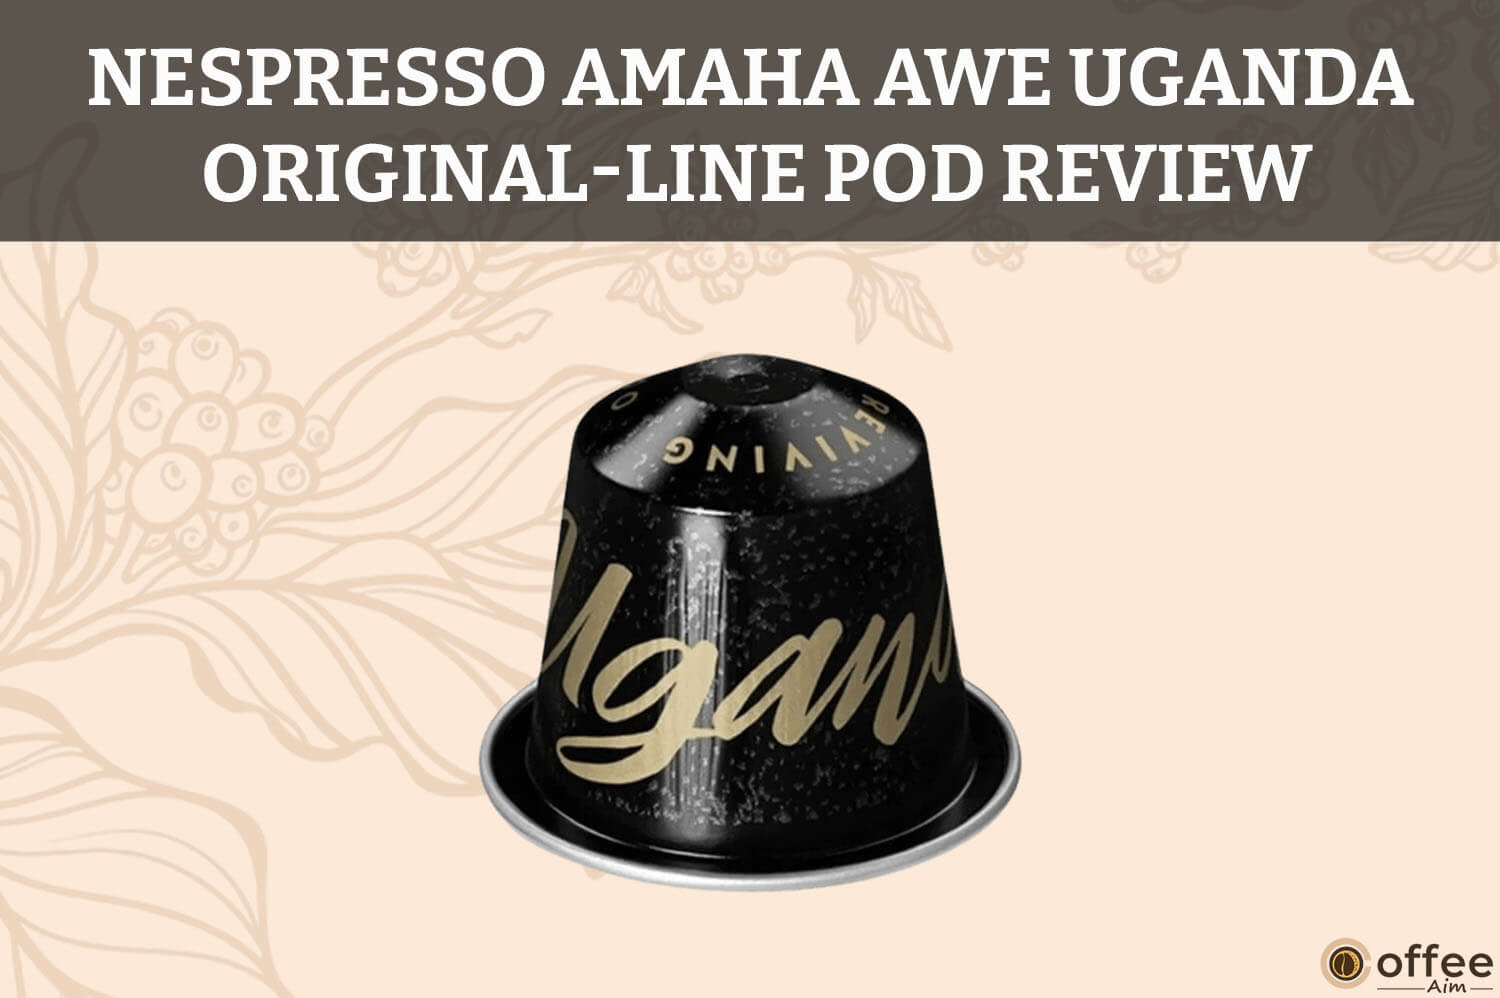 Featured image for the article "Nespresso Amaha Awe Uganda OriginalLine Pod Review"